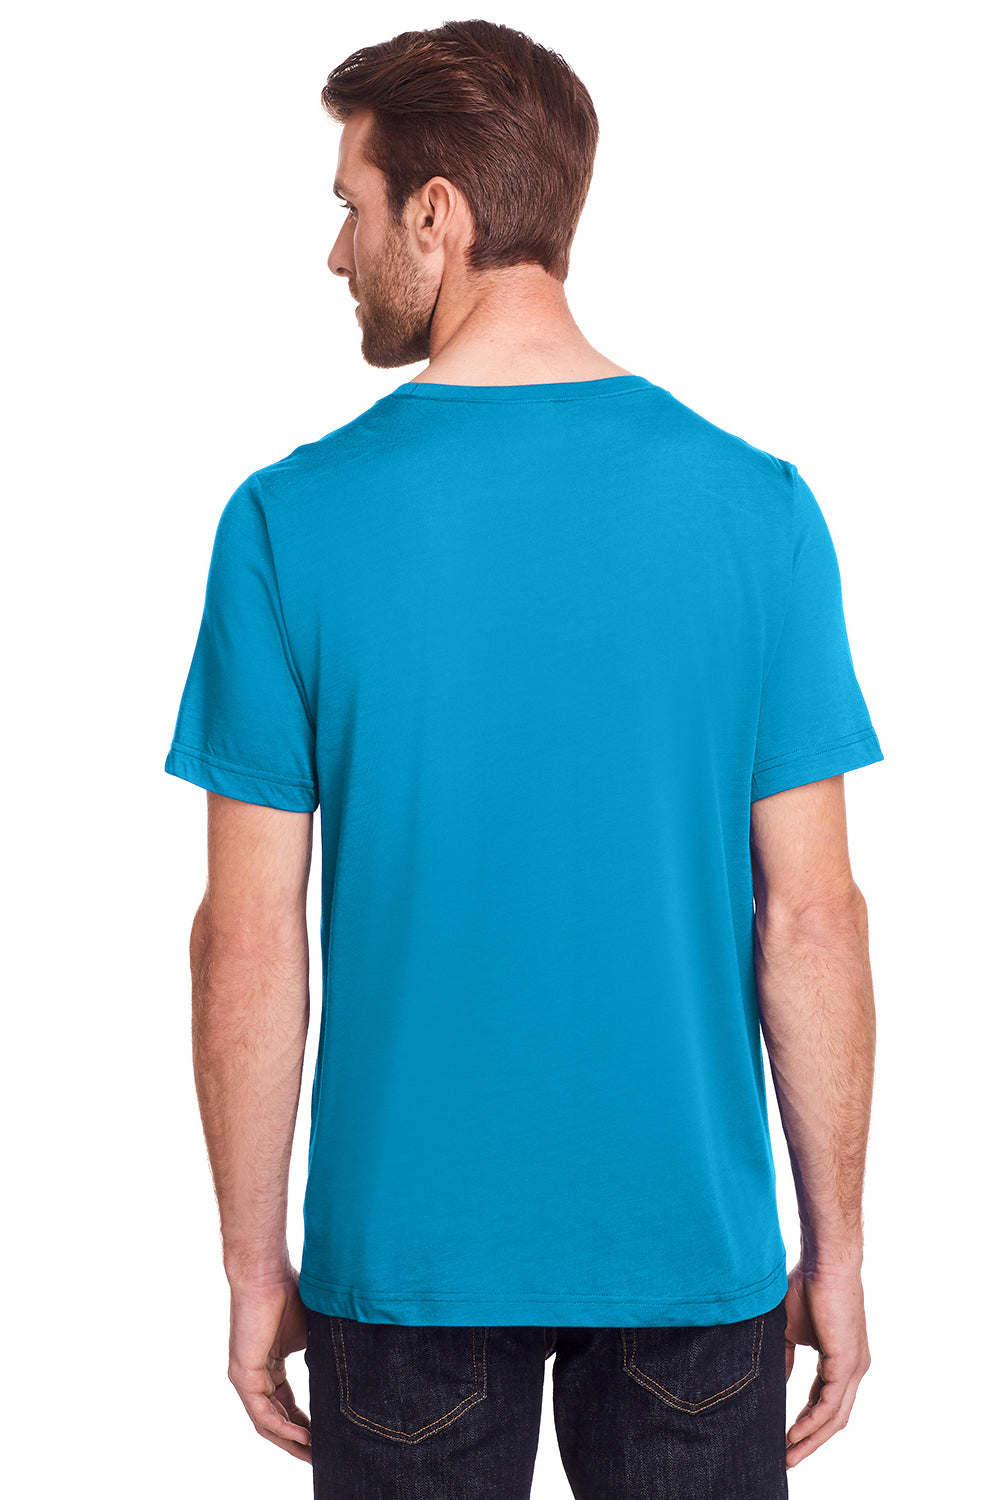 Core 365 CE111 Mens Fusion ChromaSoft Performance Moisture Wicking Short Sleeve Crewneck T-Shirt Electric Blue Back